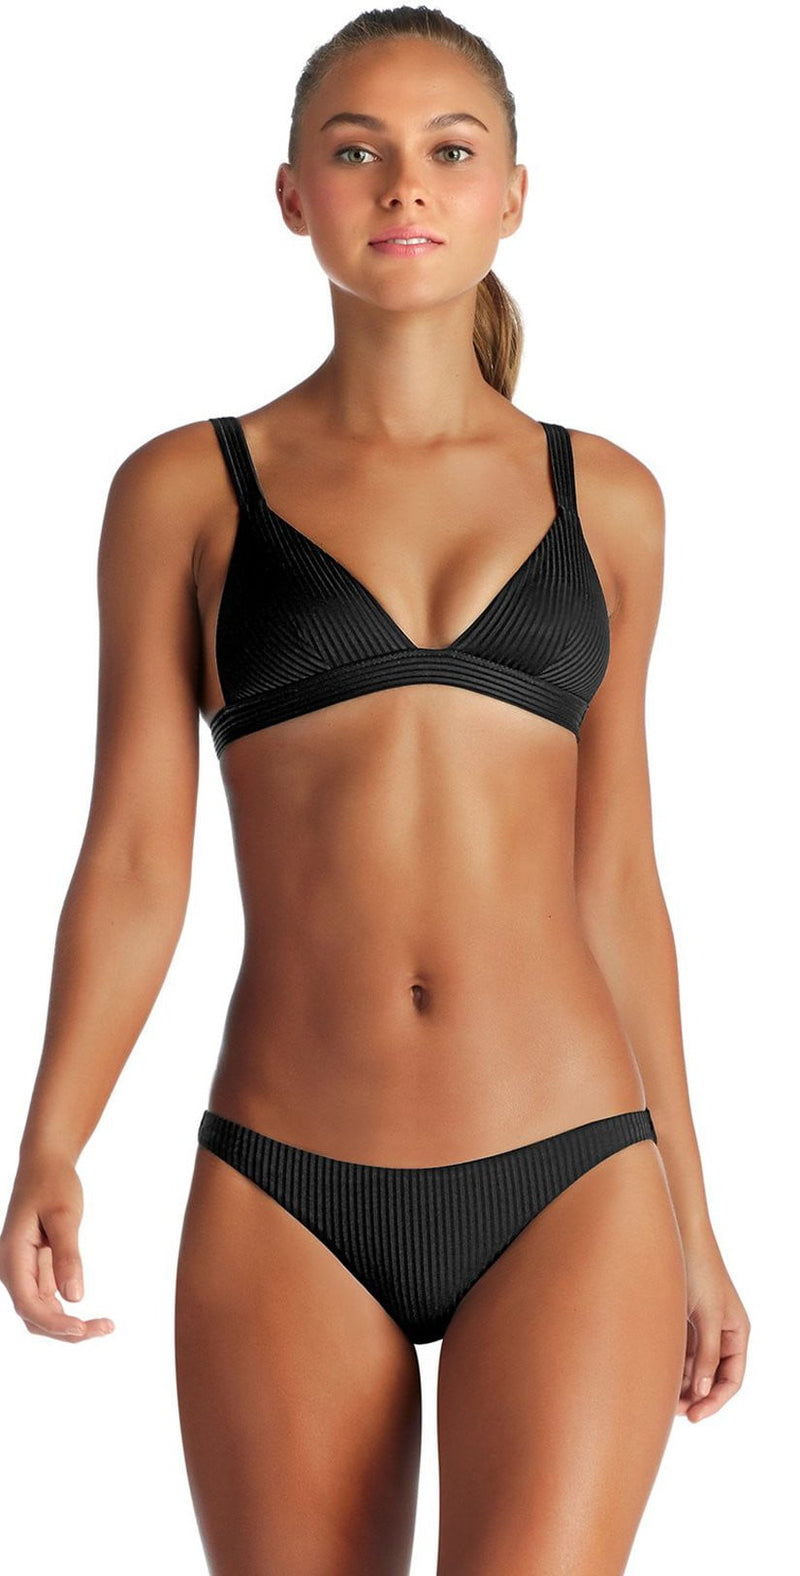 Vitamin A EcoRib Neutra Triangle Bikini Top in Black 805T ERB: